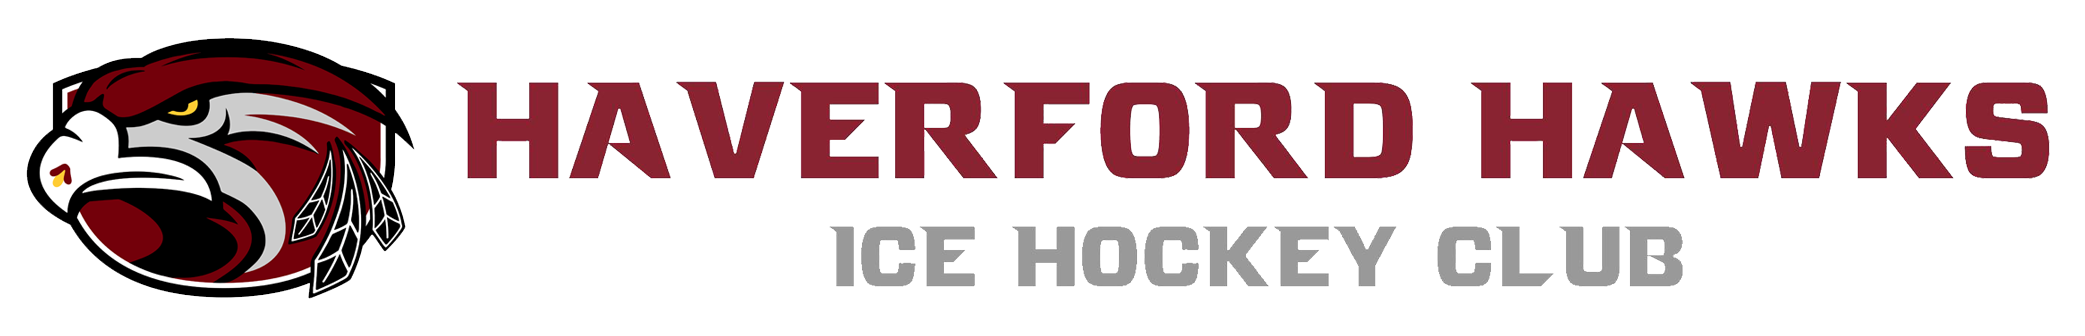 Haverford-Hawks-Ice-Hockey-logo-horizontal